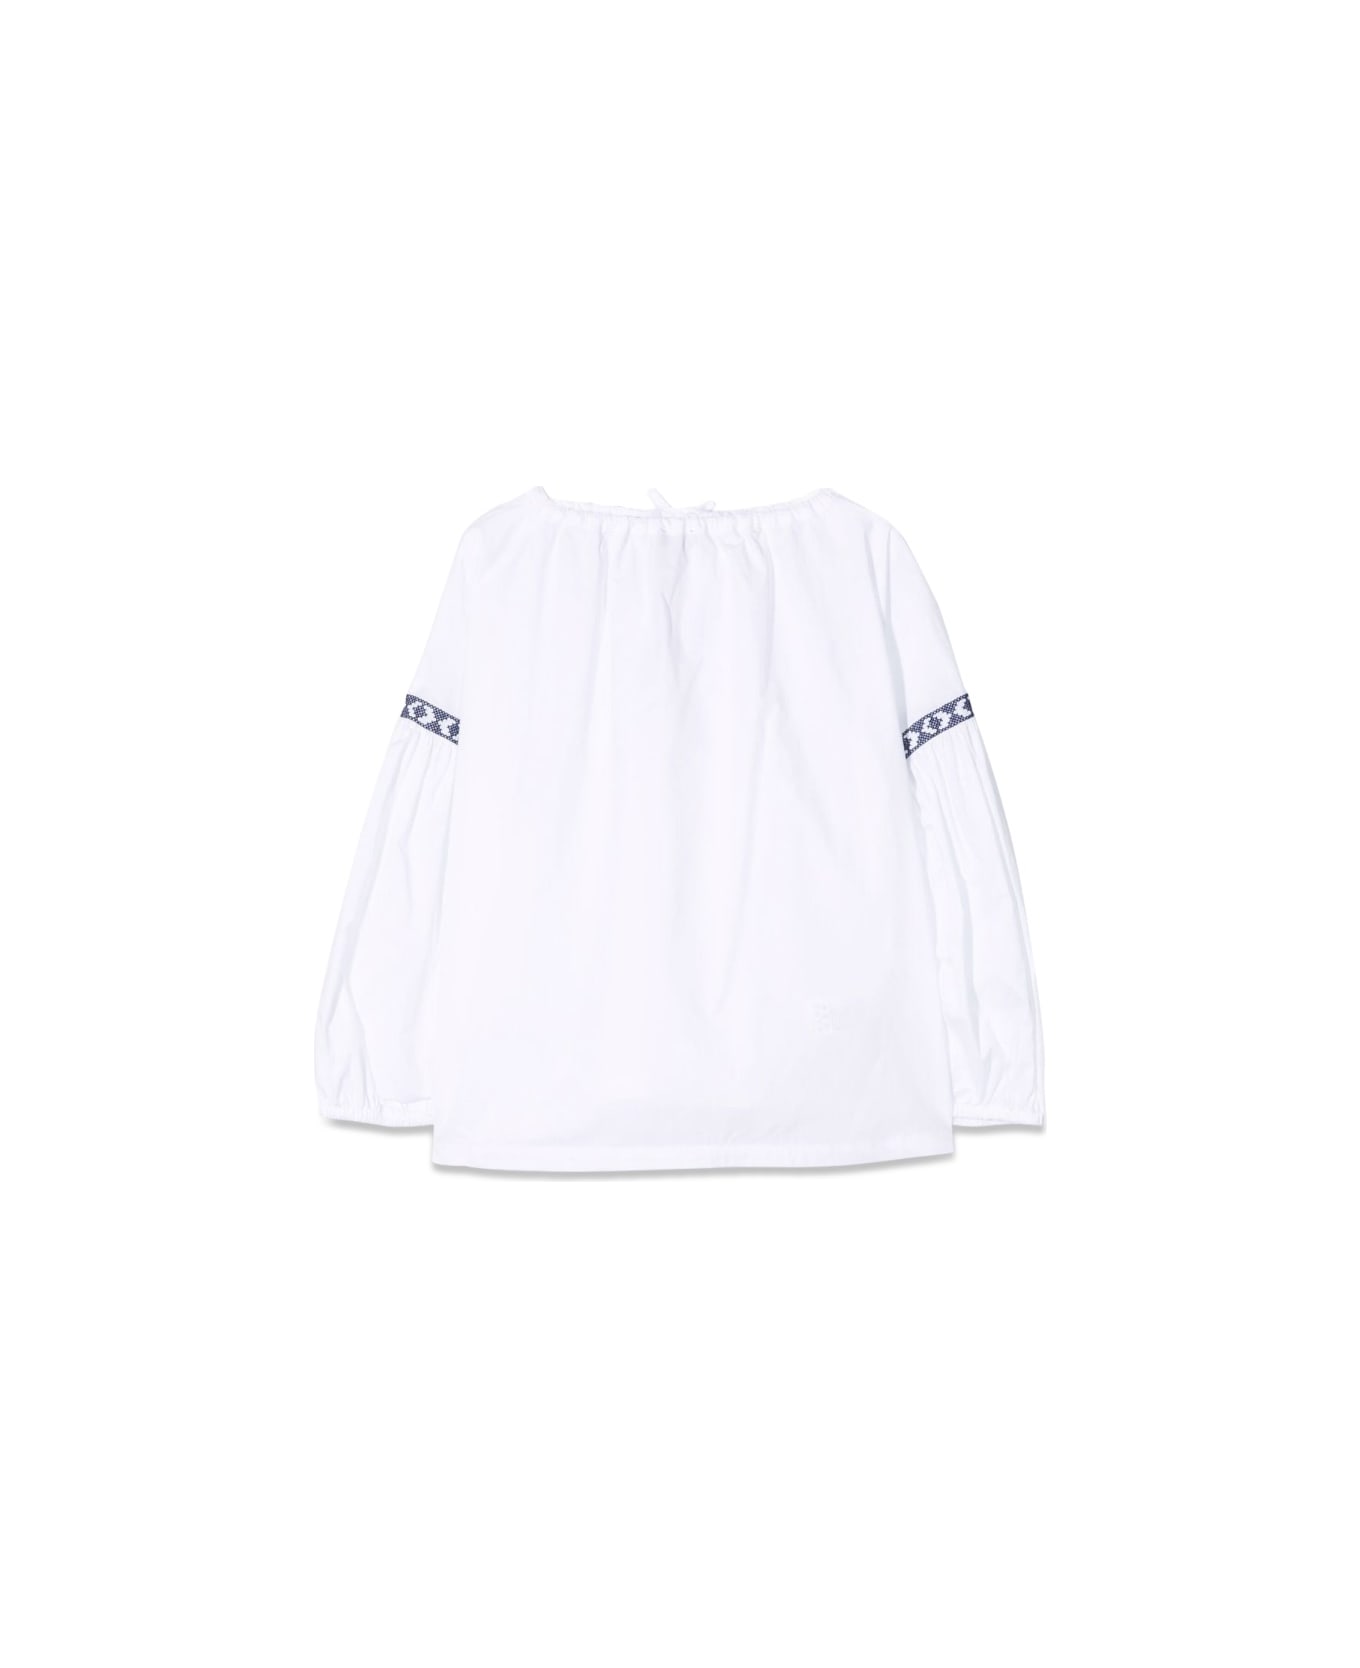 Il Gufo White/blue M/long Shirt - WHITE